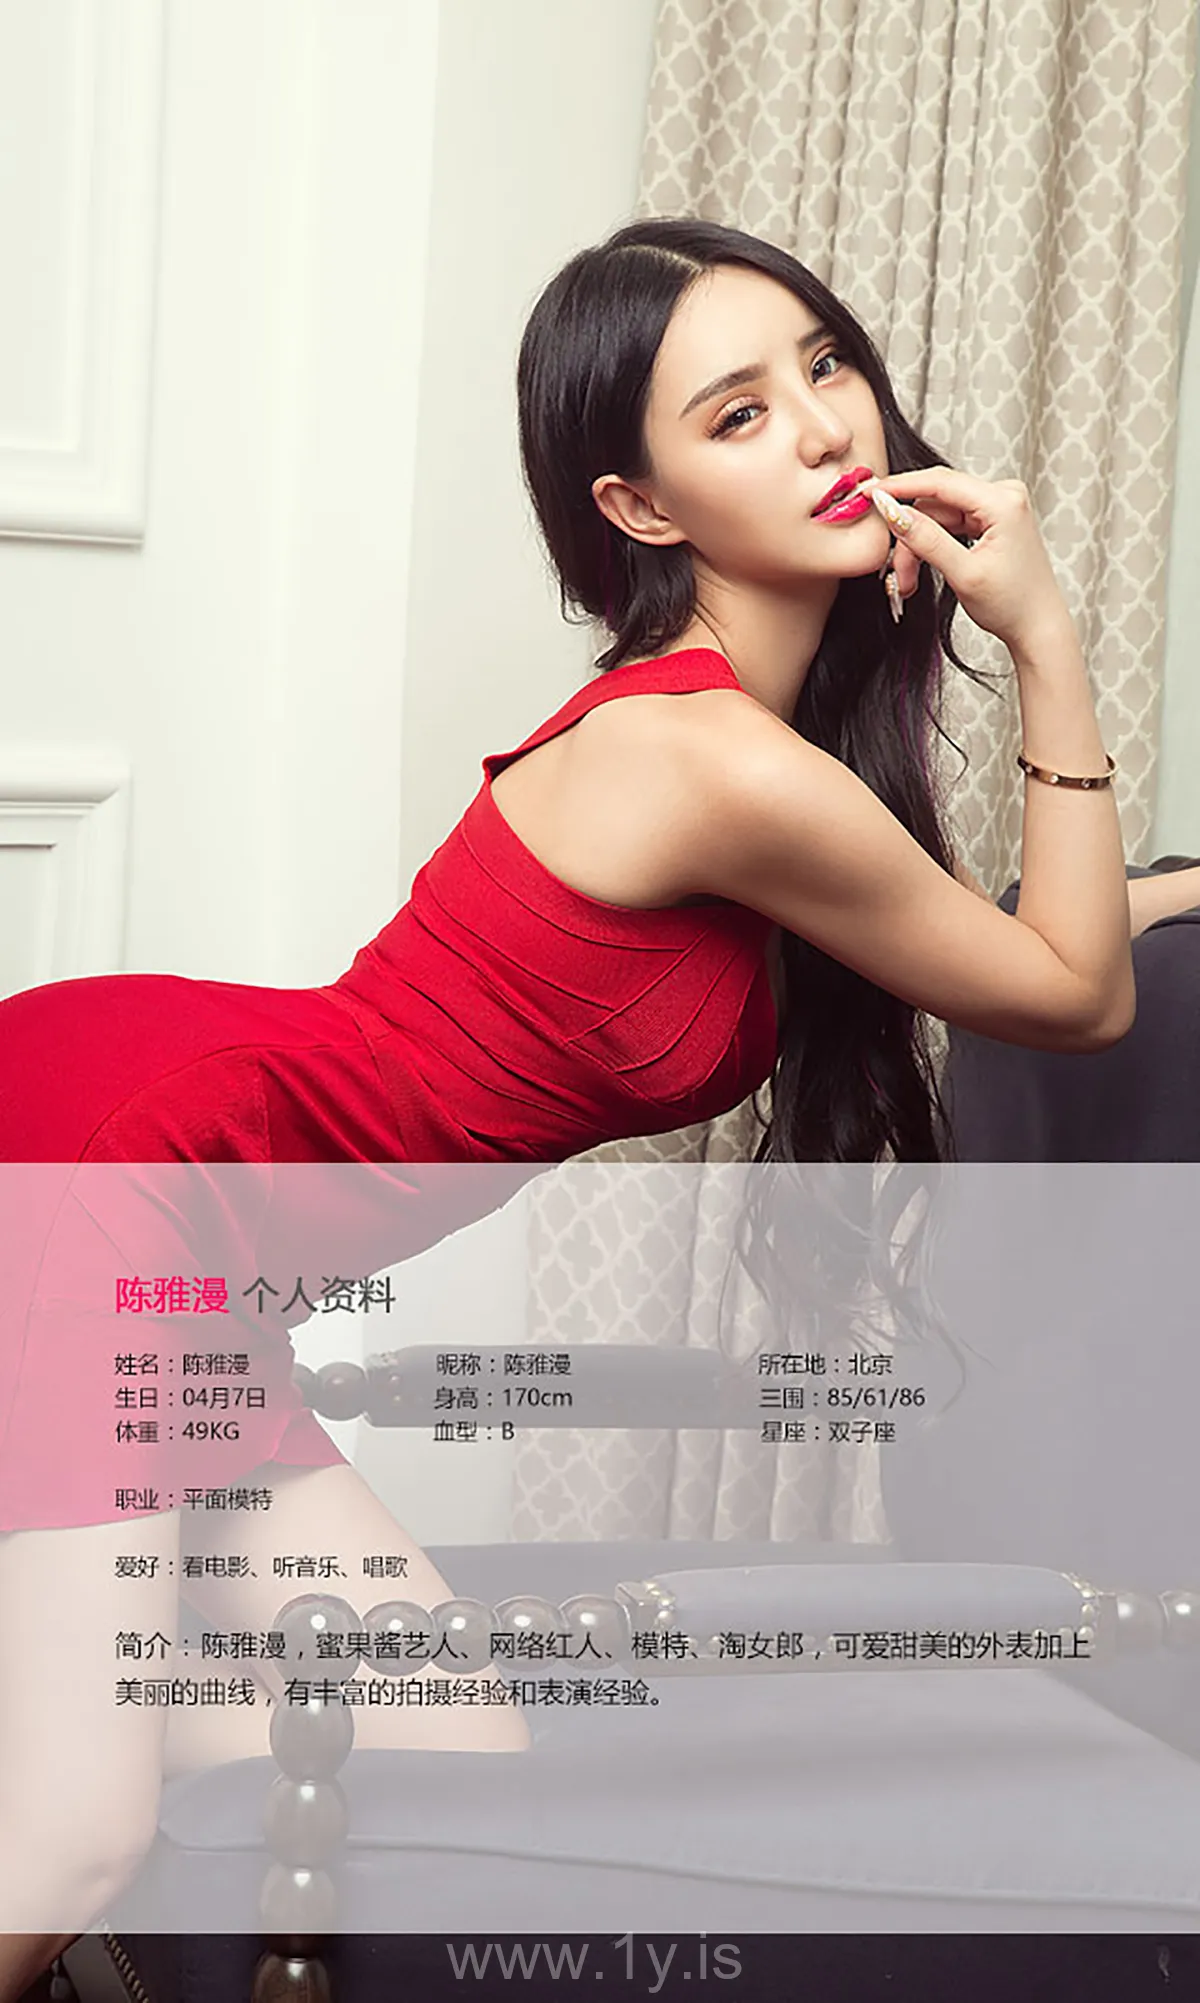 UGIRLS NO.441 Lovely & Gorgeous Chinese Girl 红与黑陈雅漫